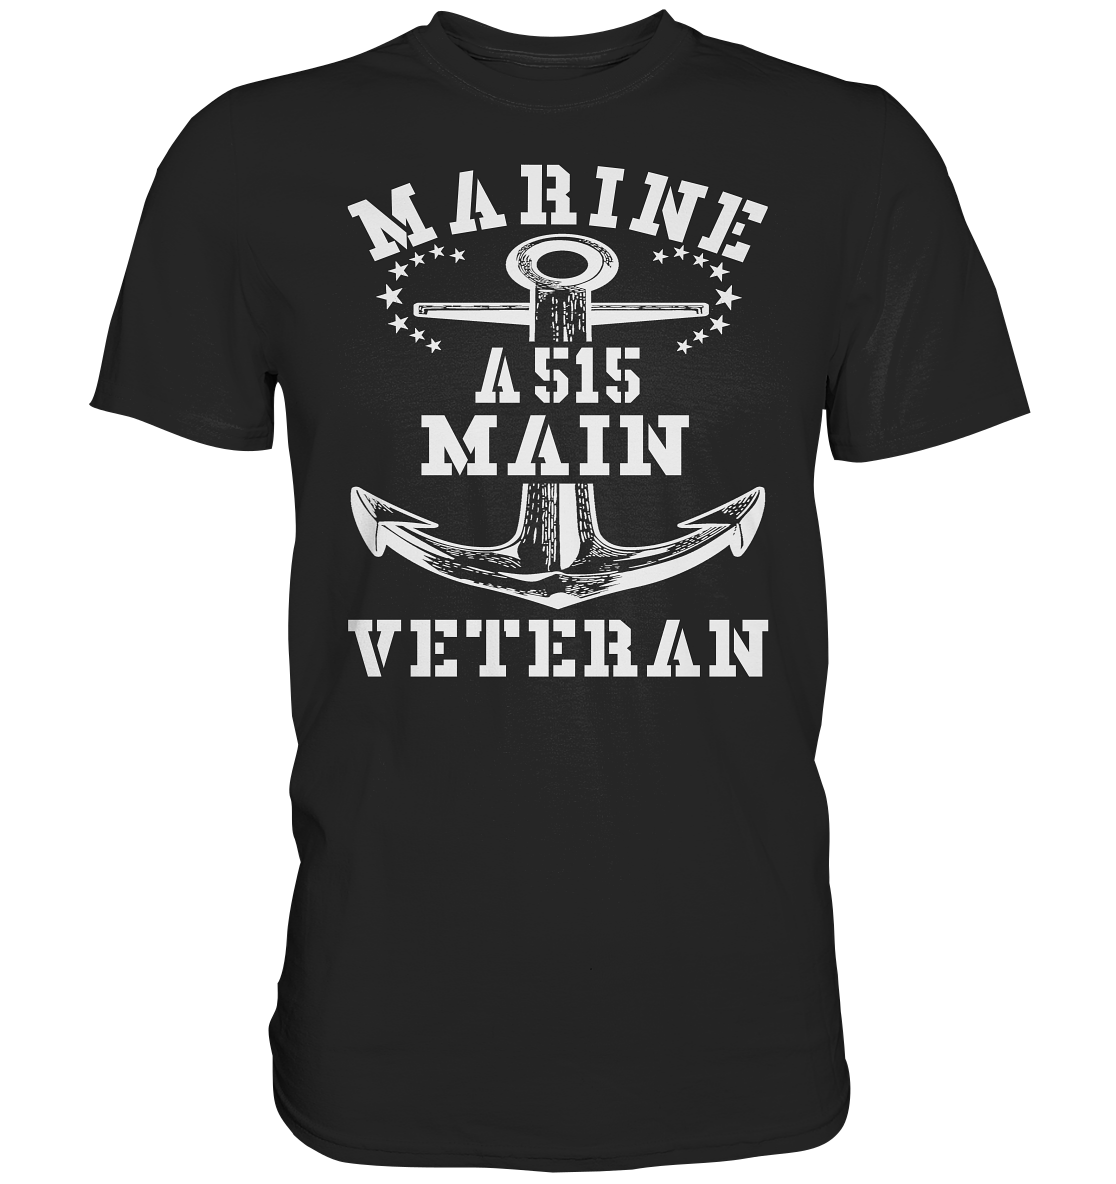 Tender A515 MAIN Marine Veteran  - Premium Shirt